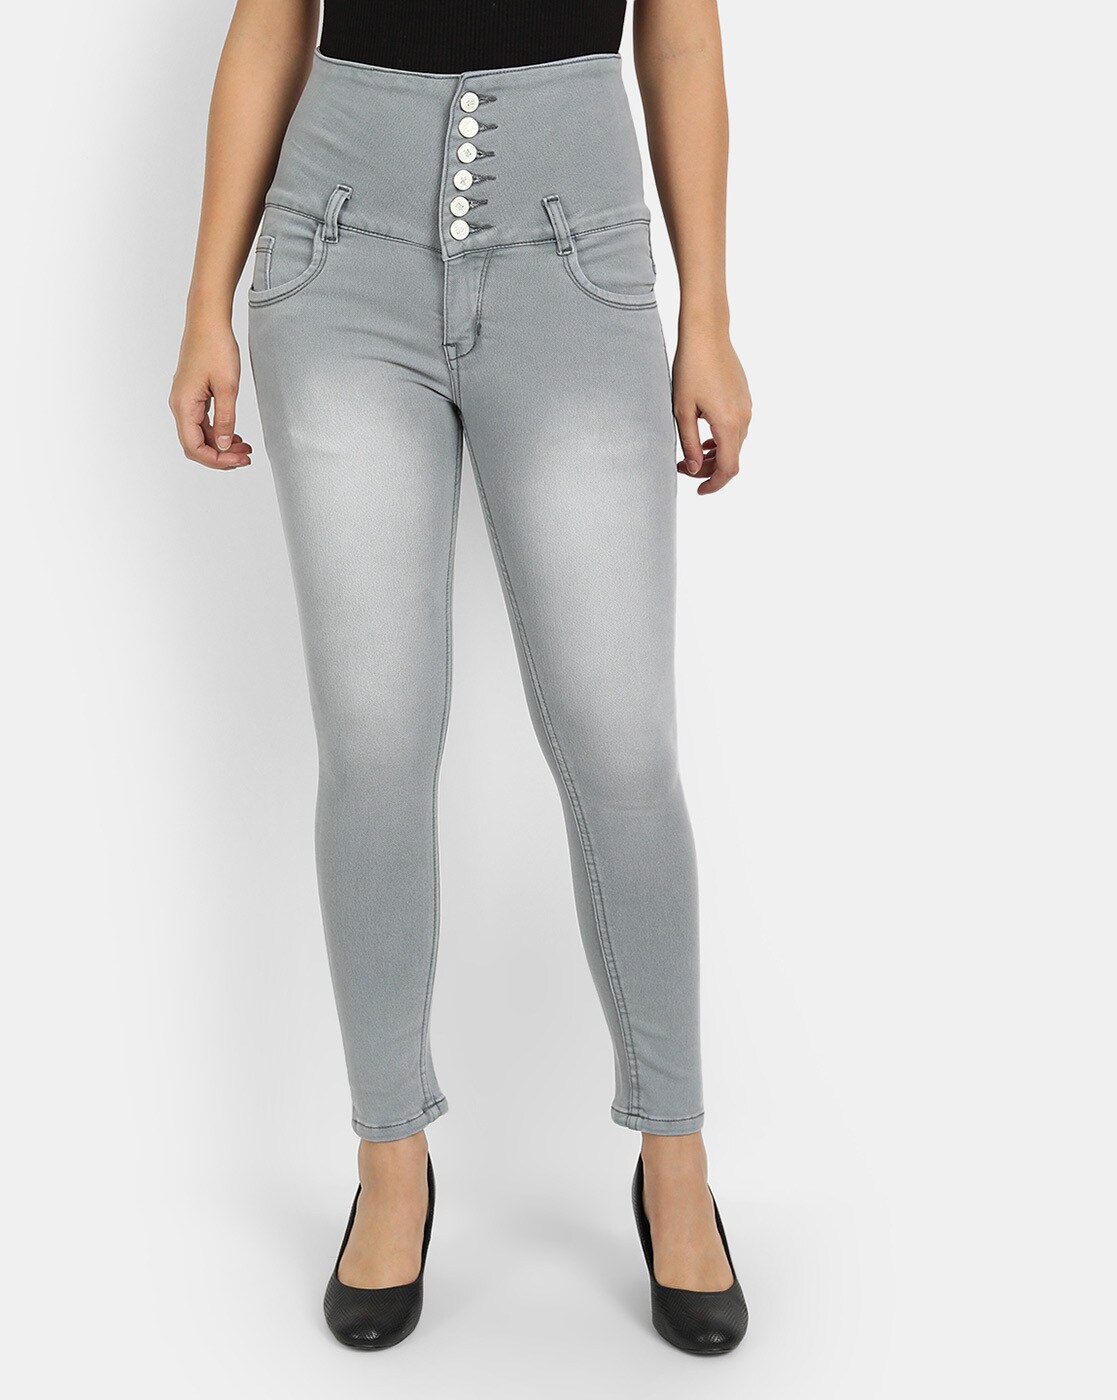 Aggregate 149+ grey denim jeans womens best